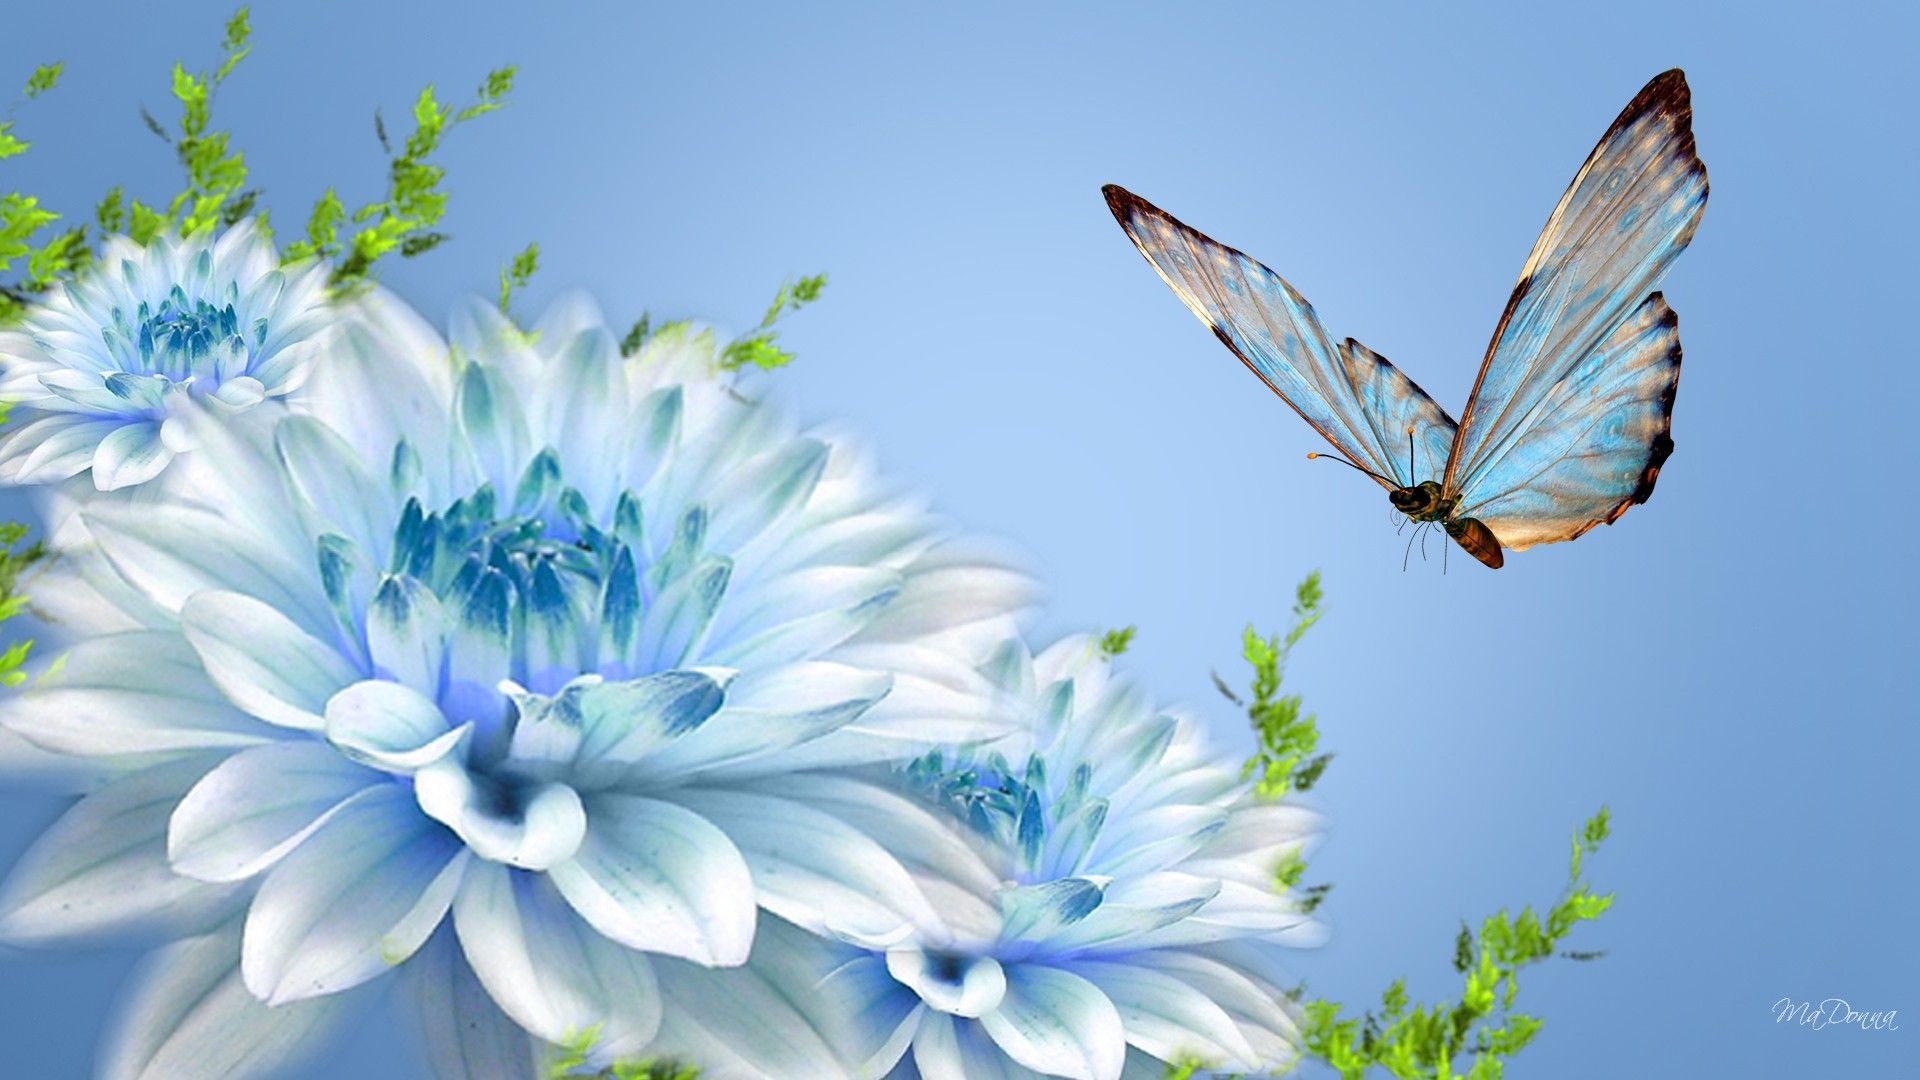 spring flowers and butterflies wallpaper. Blue